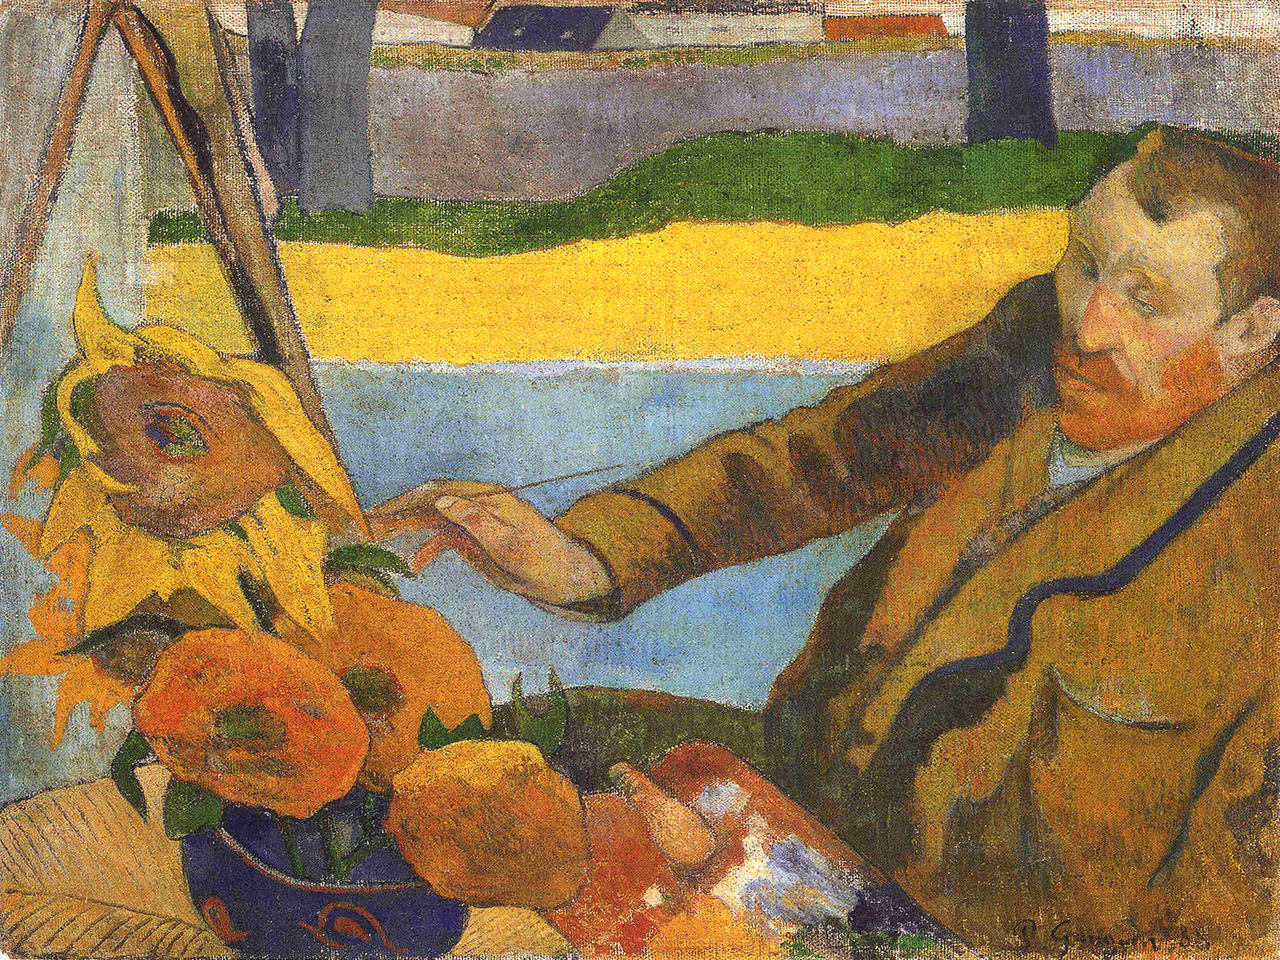 A painting by Gaugin depicting Vincent van Gogh.